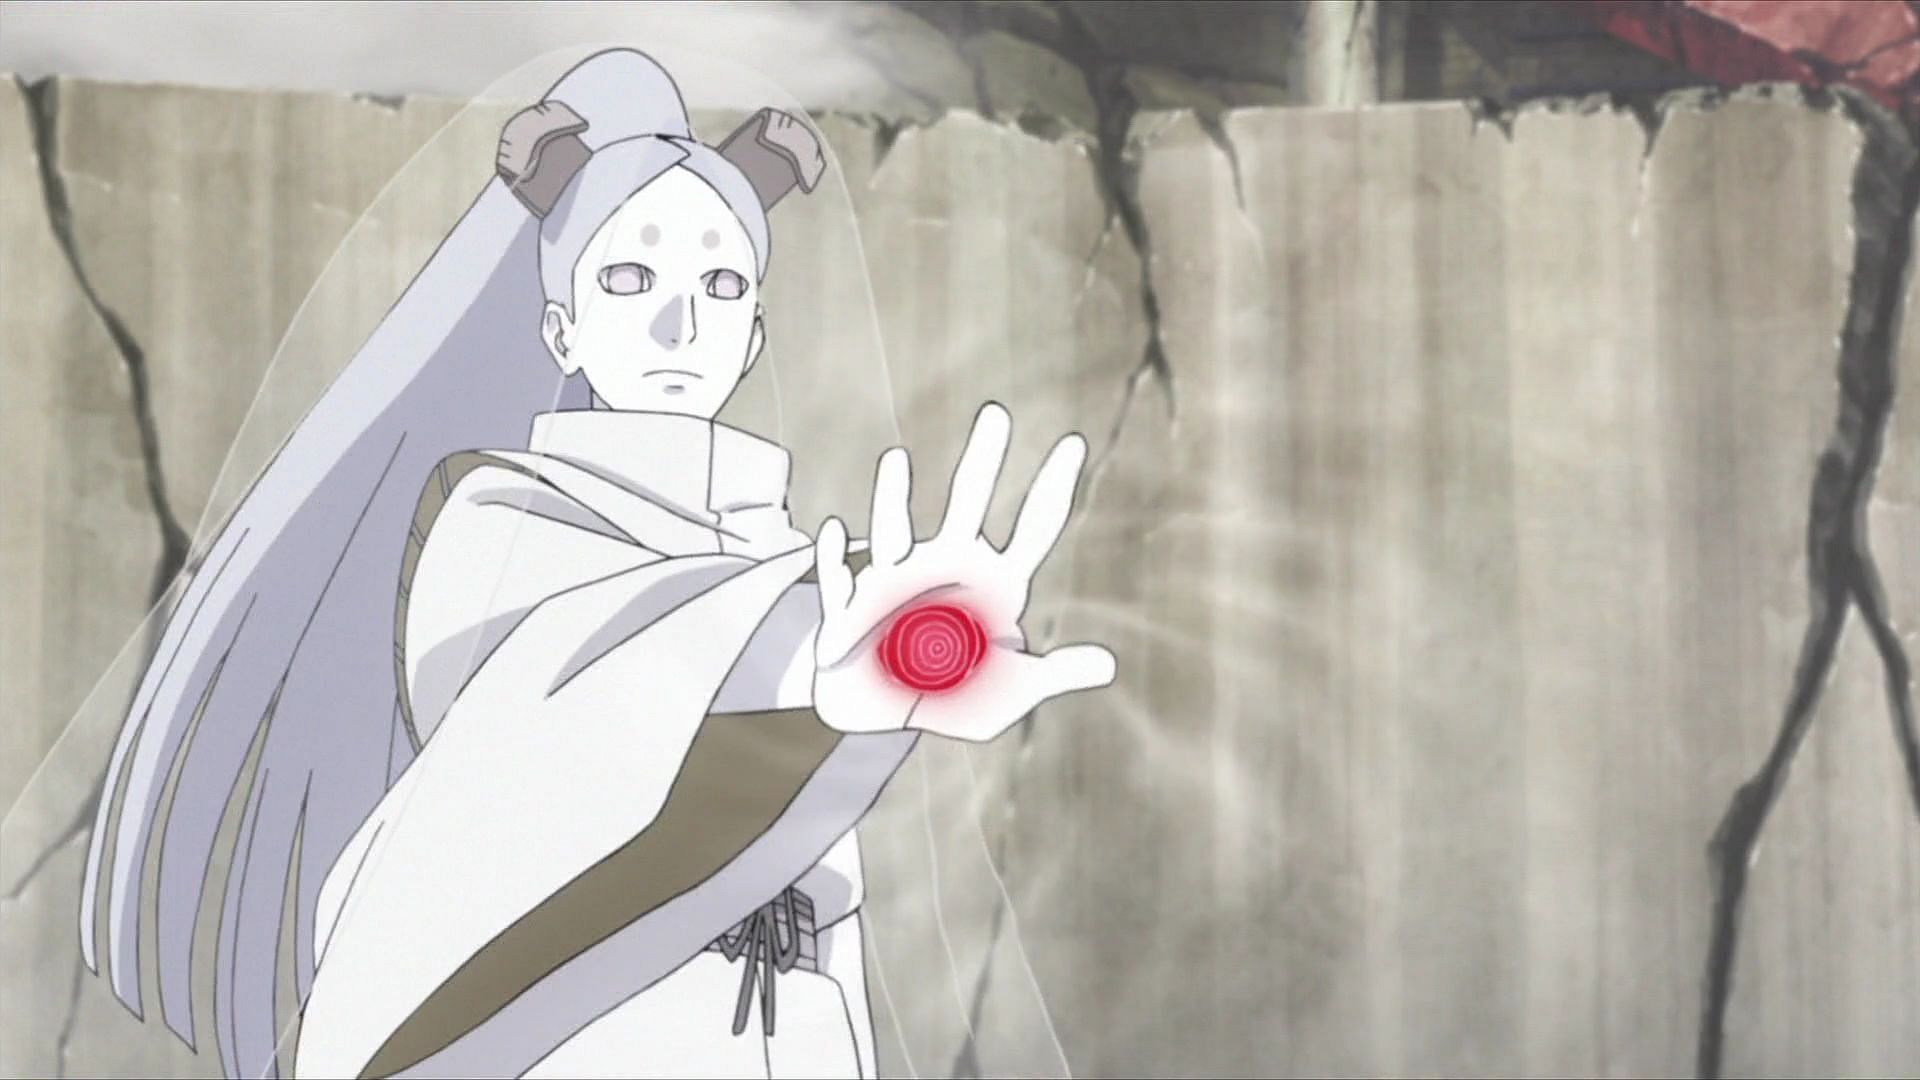 Momoshiki as shown in the anime (Image via Boruto)